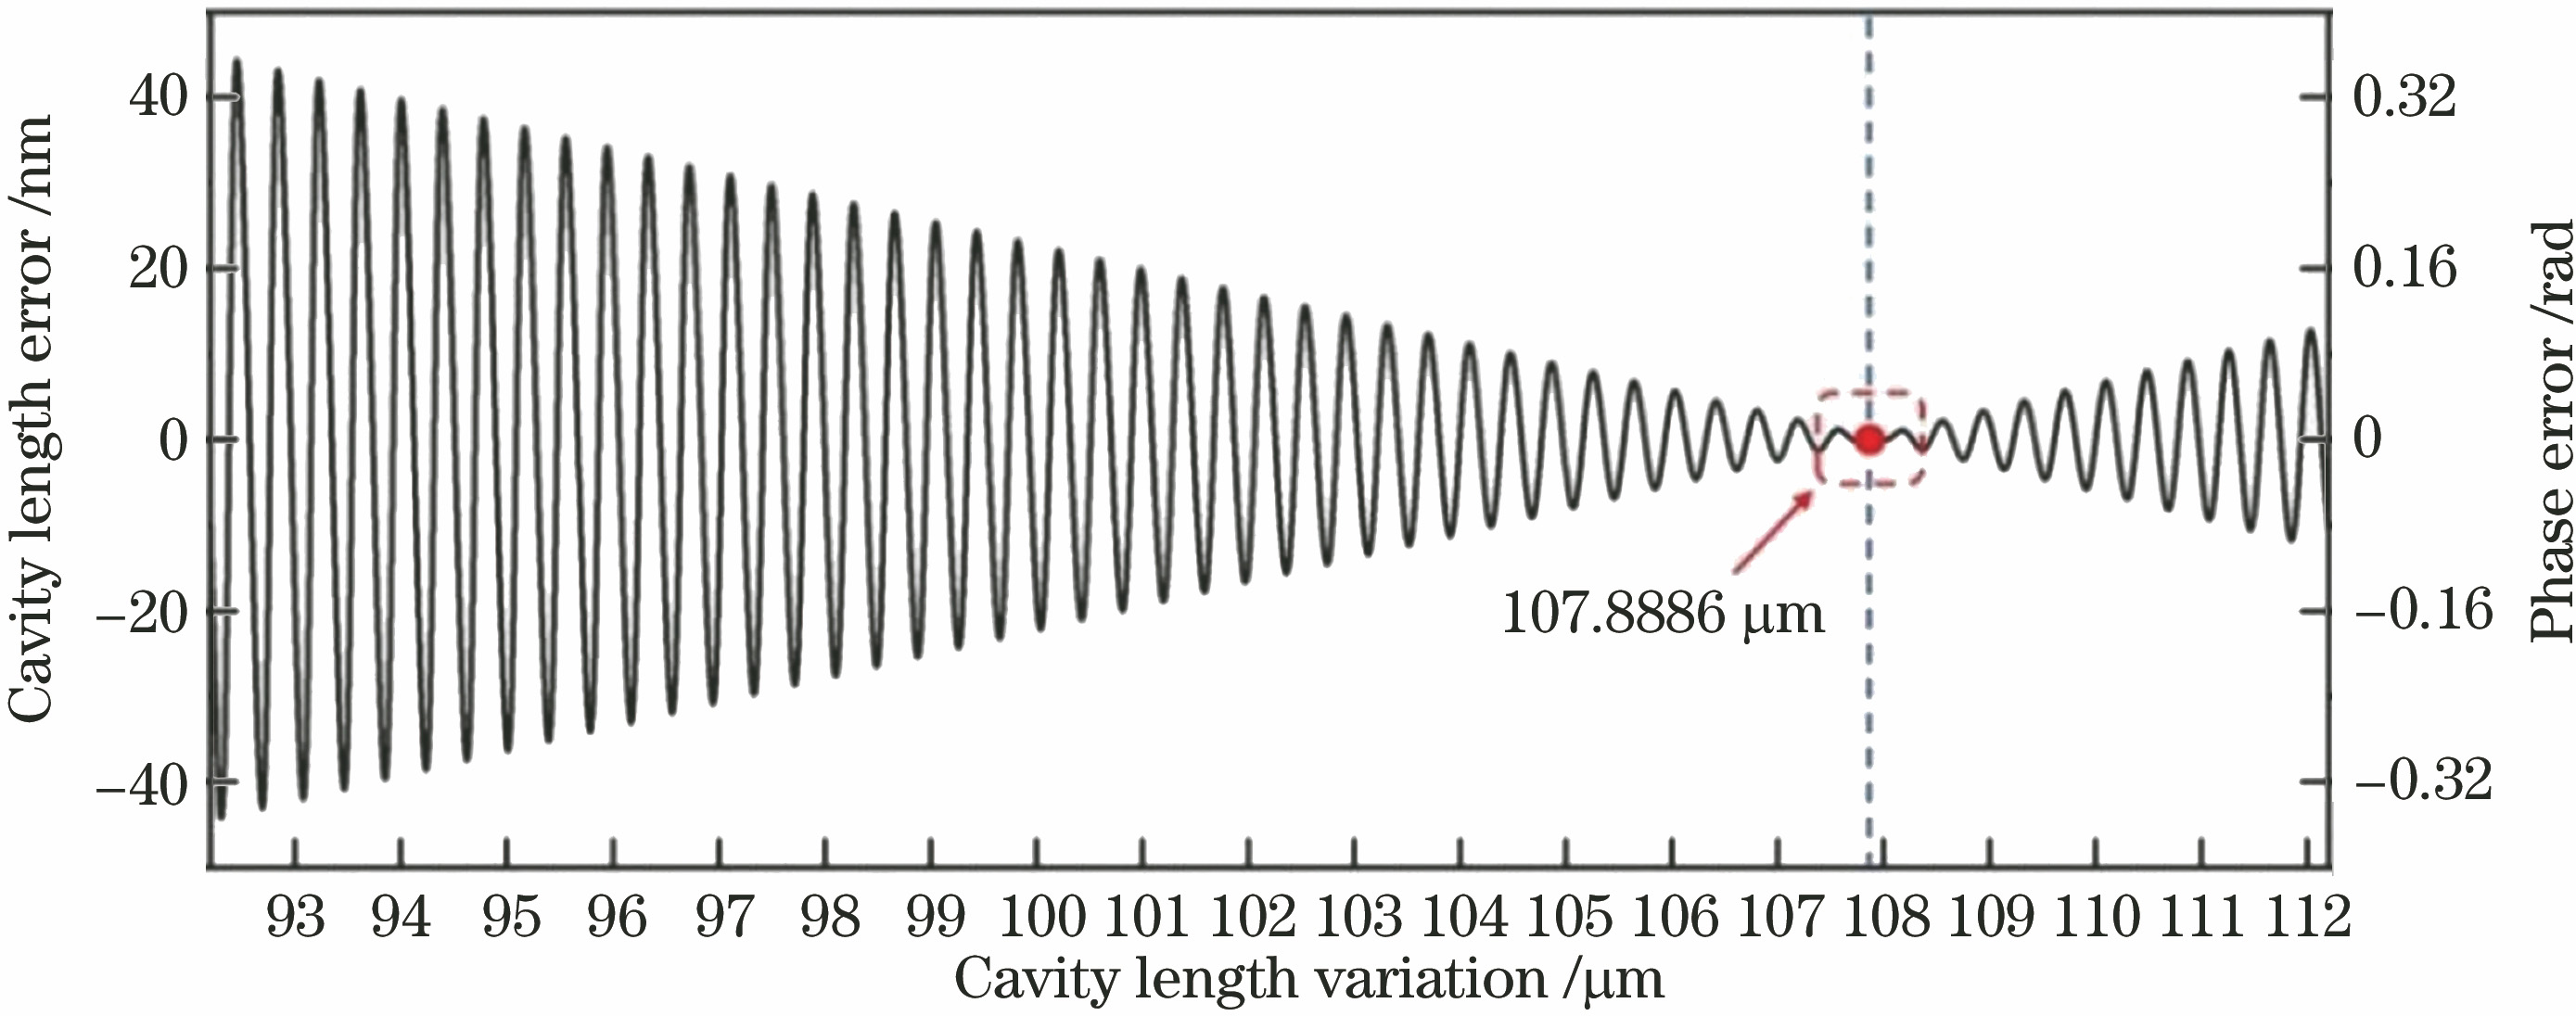 Theoretical demodulation error when cavity length of EFPI sensor varies in the range of 92.1983--112.1983 μm